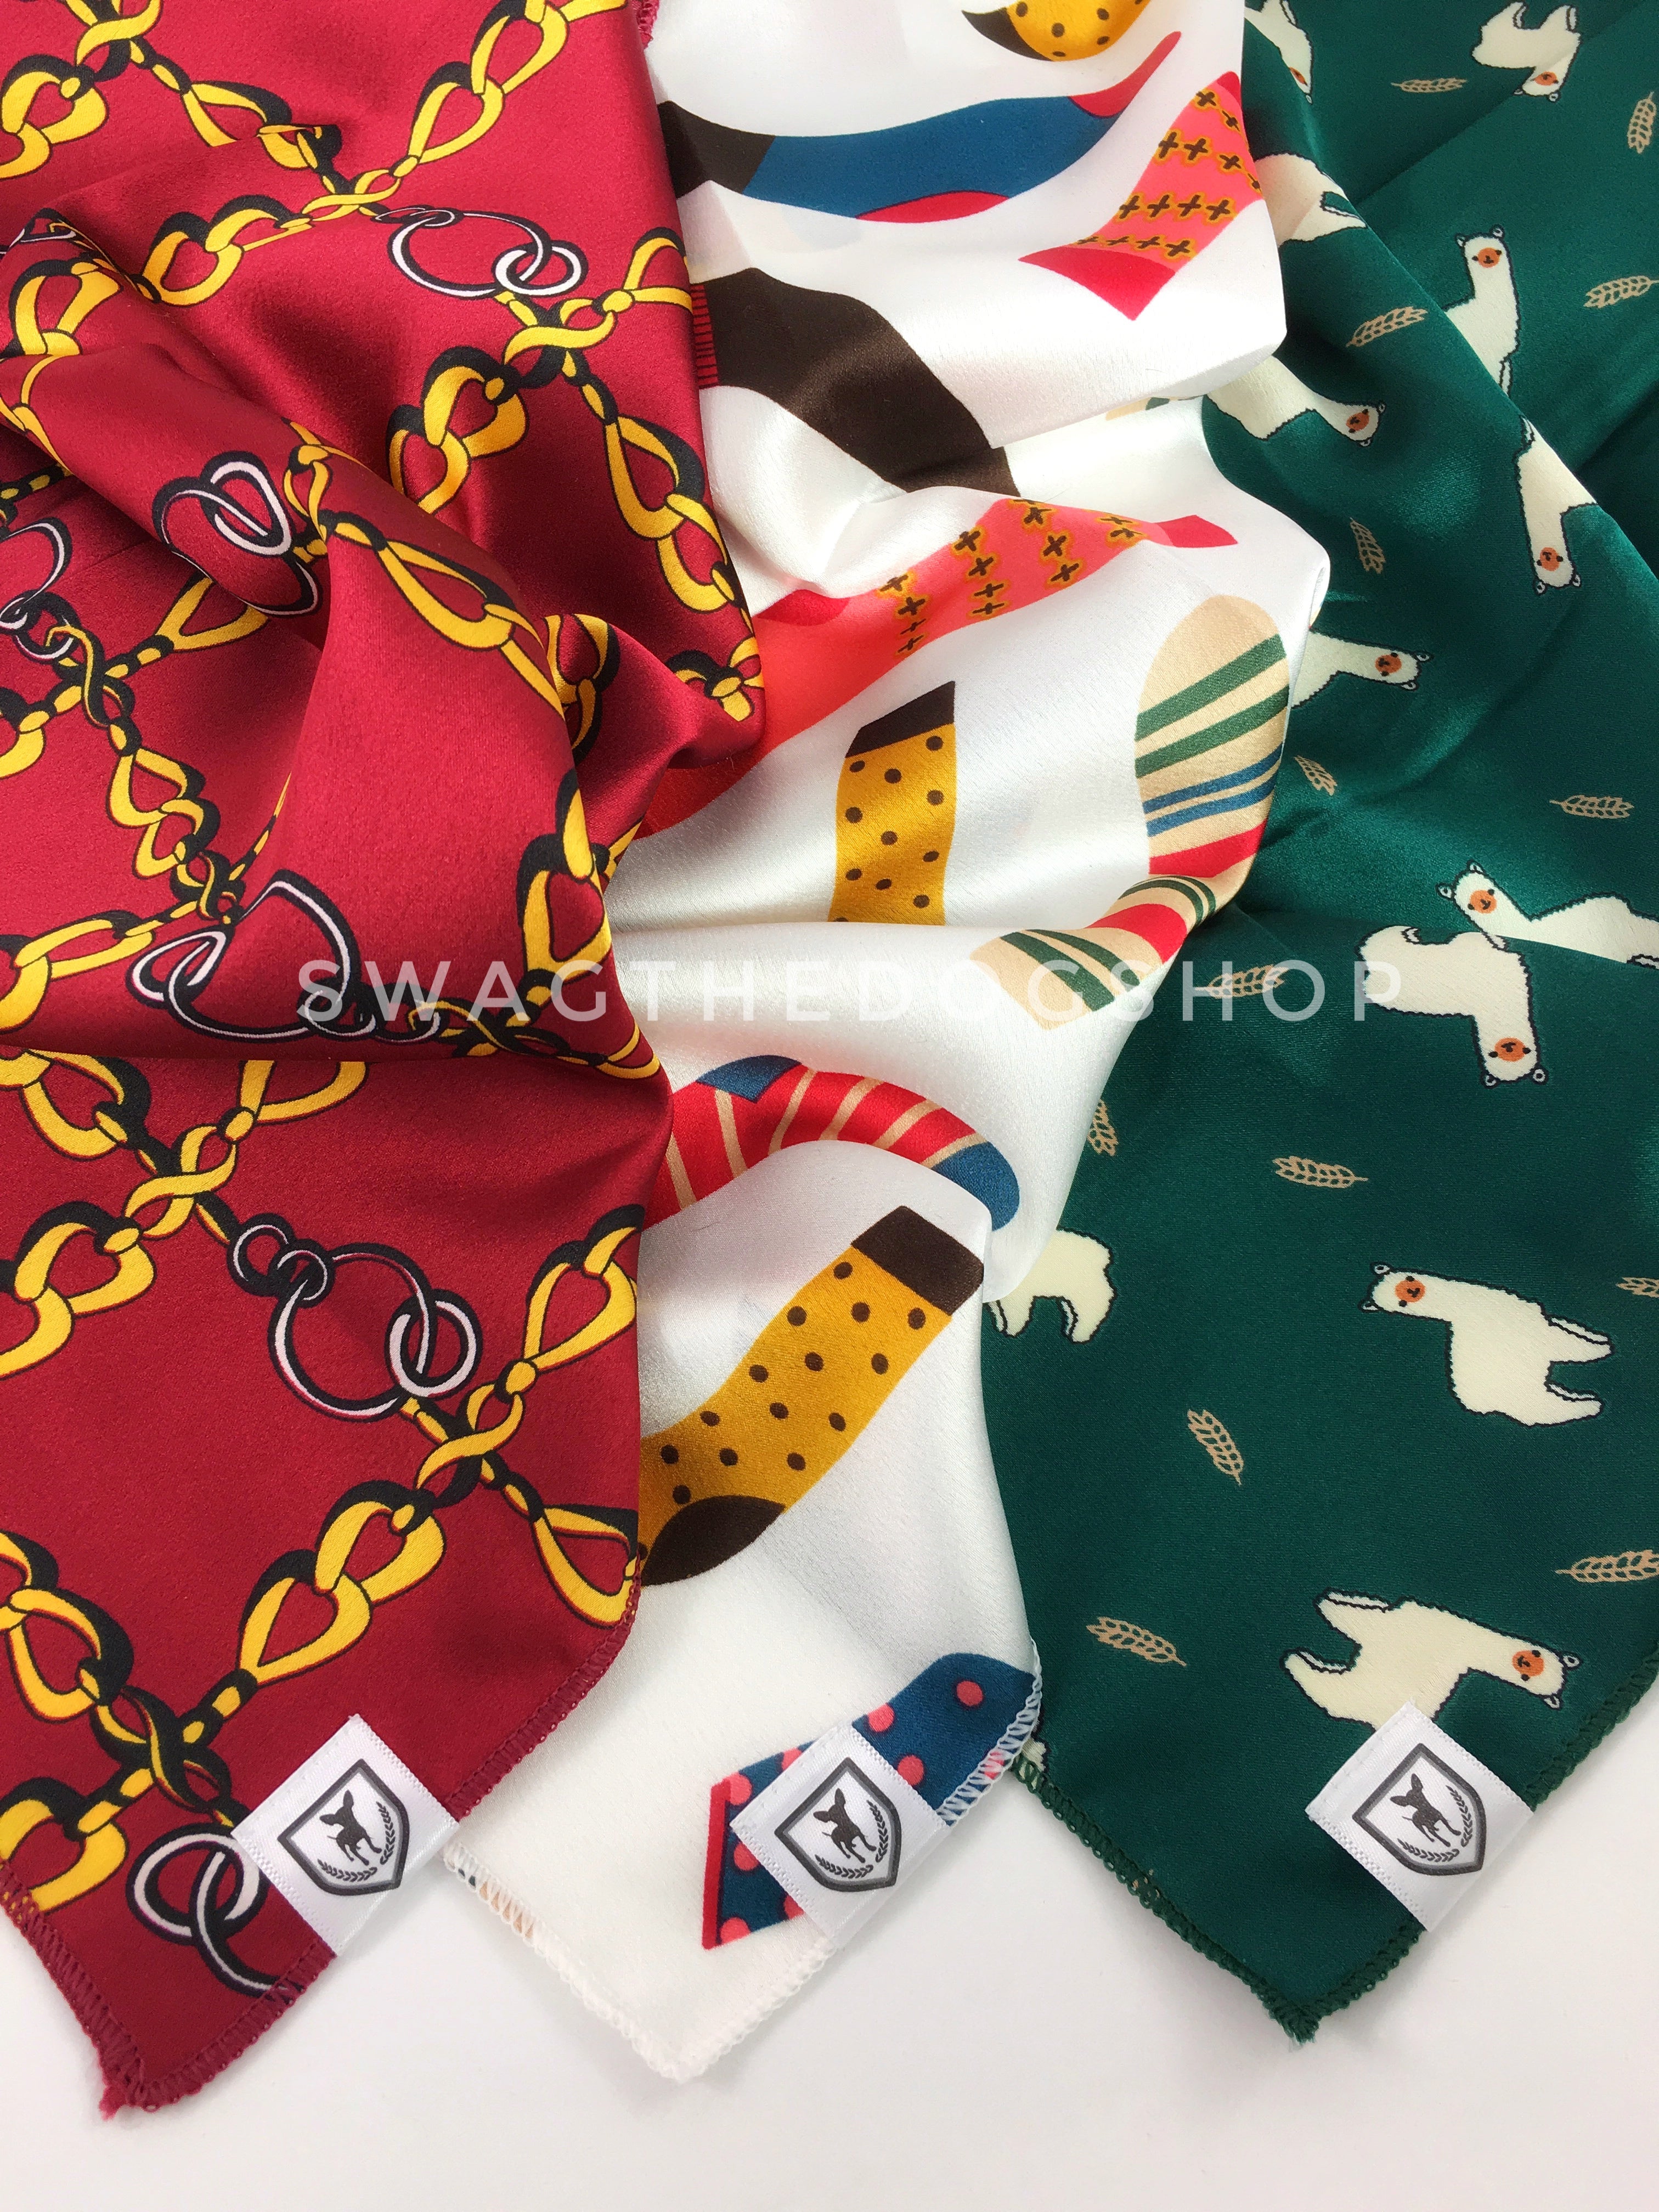 Take an advantage of 3 for $30 deal. 3 Red/ White/ Green color theme Swagdana Scarves displayed. 1-24K Burgundy Gold. 2-Rock Your Socks. 3-Lorenzo Llama Green. Dog Bandana. Dog Scarf